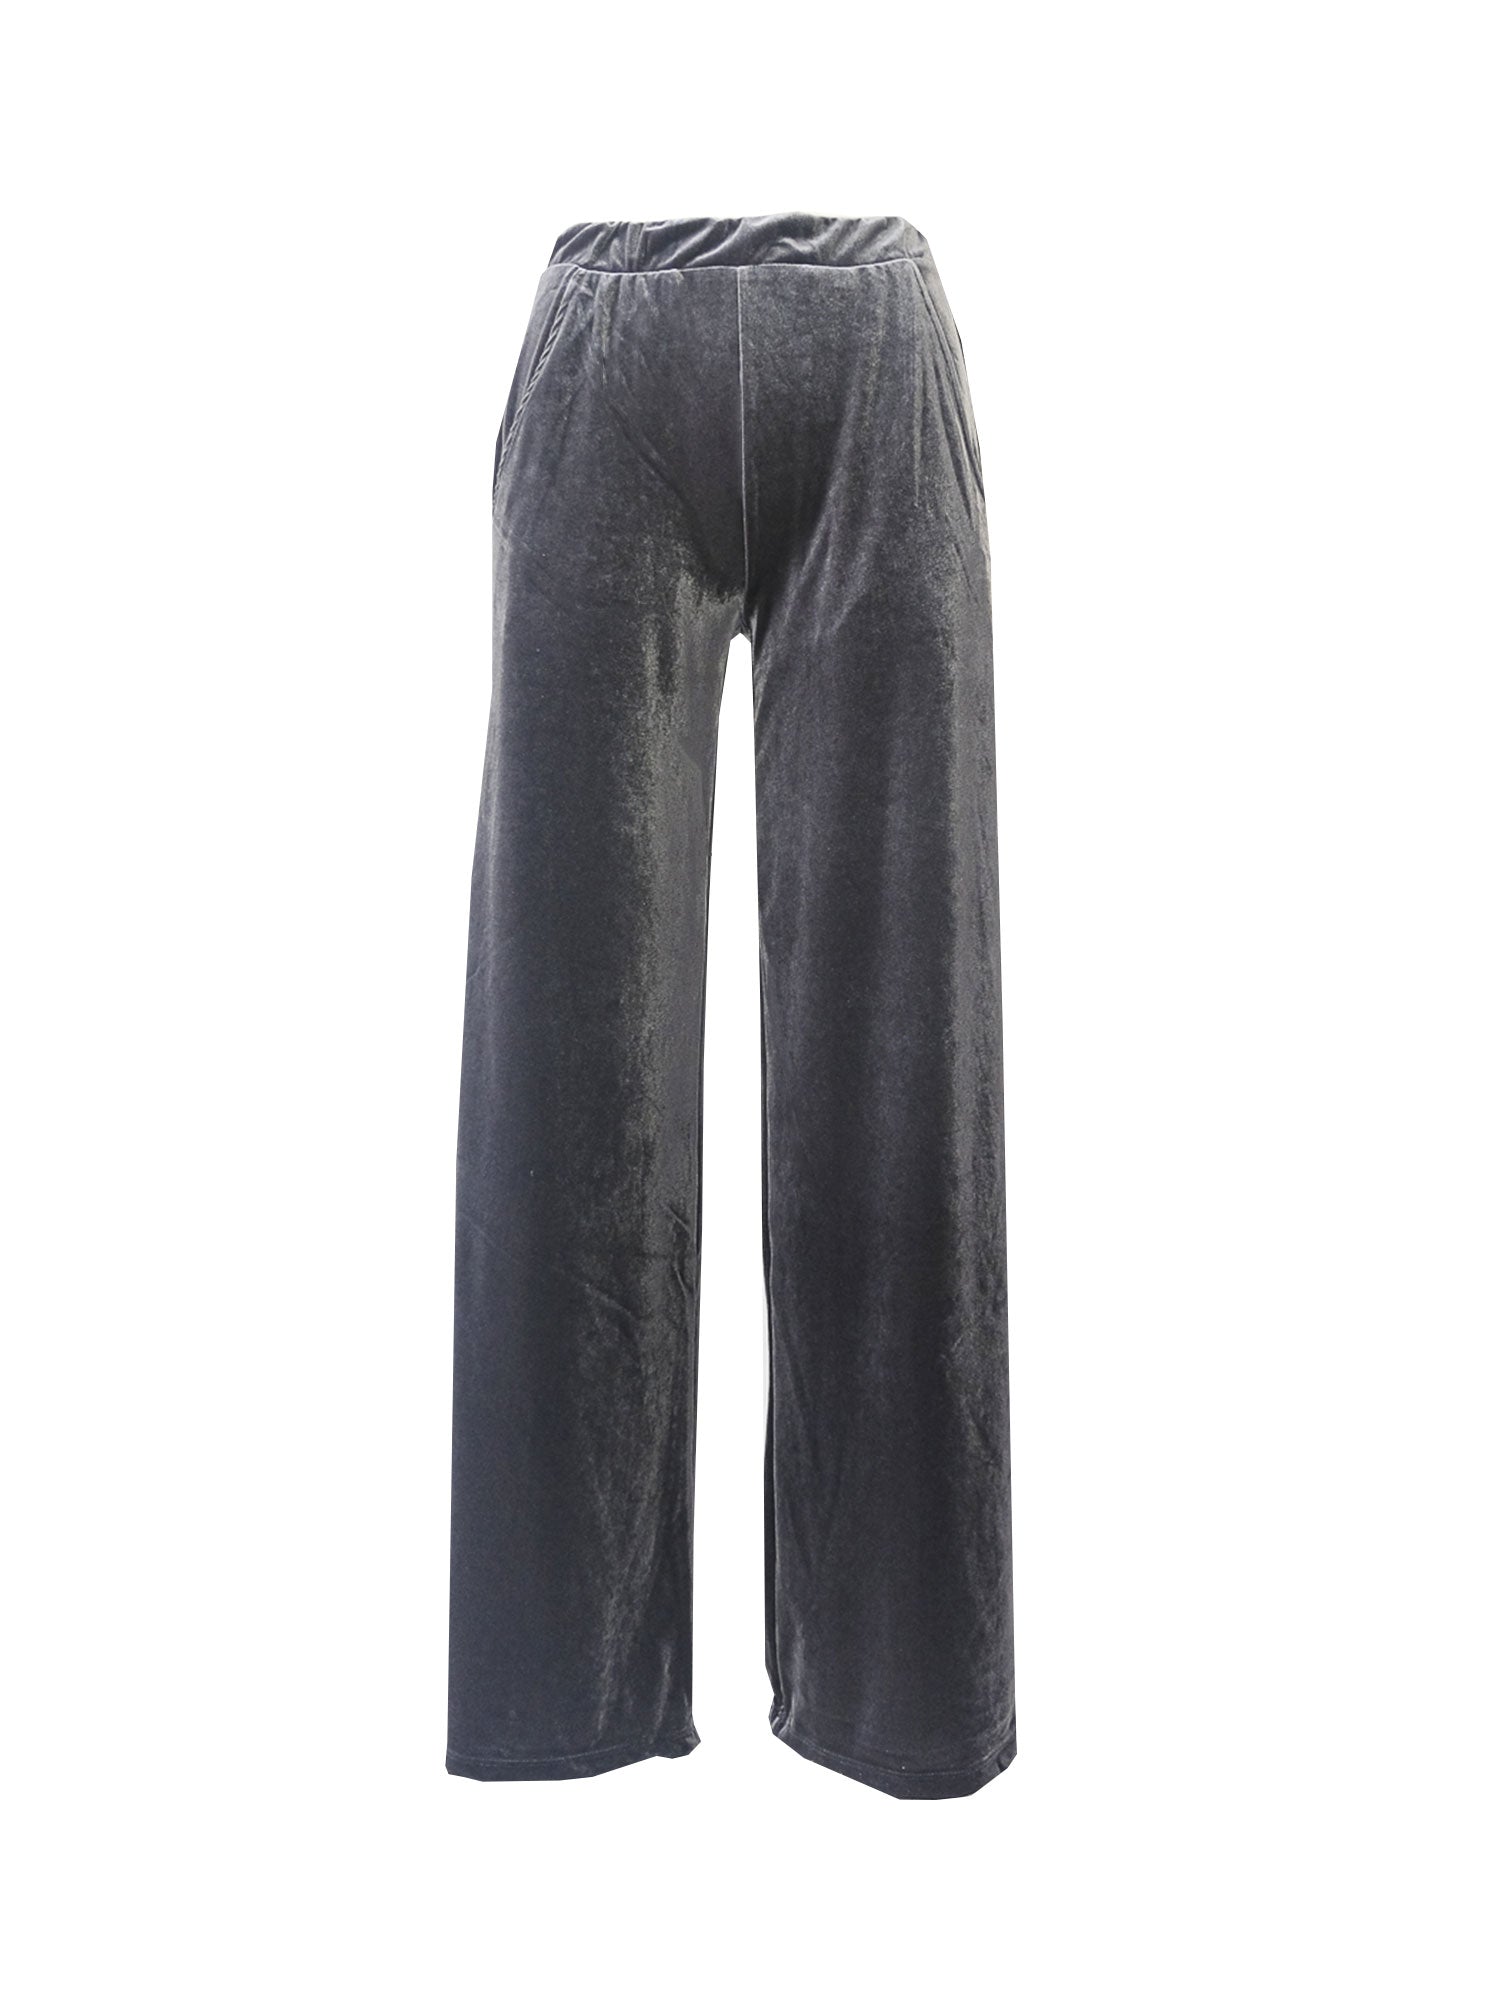 MAXIE - wide-leg chenille trousers in grey